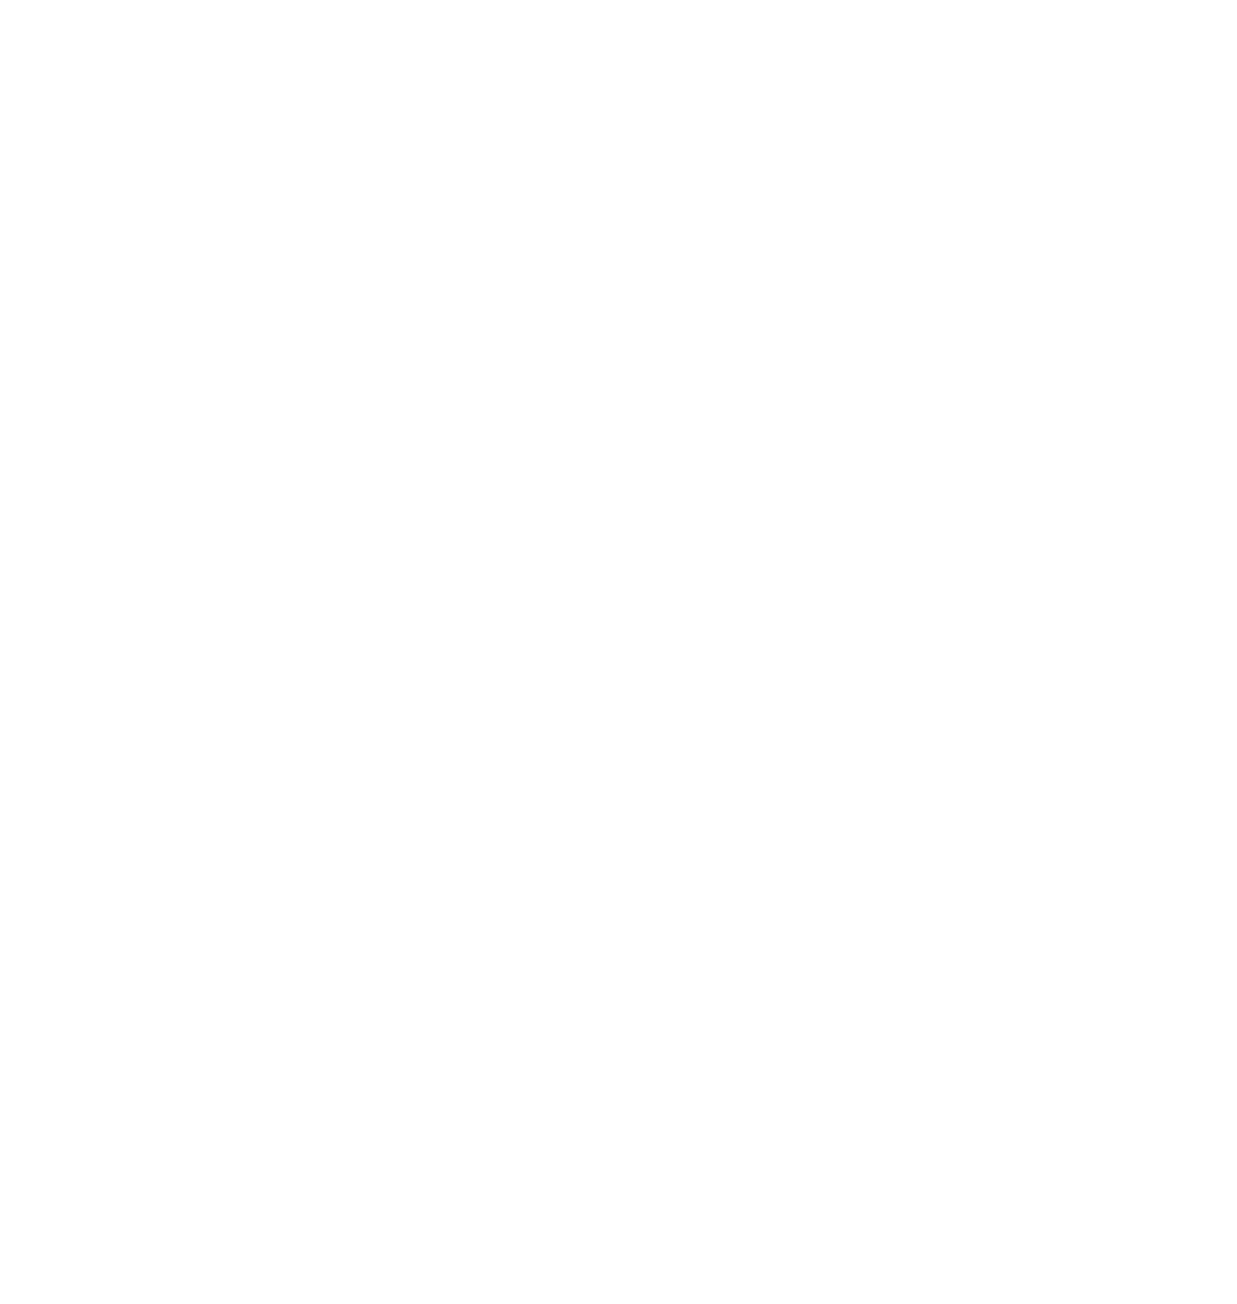 Georgia Muslim Voter Project